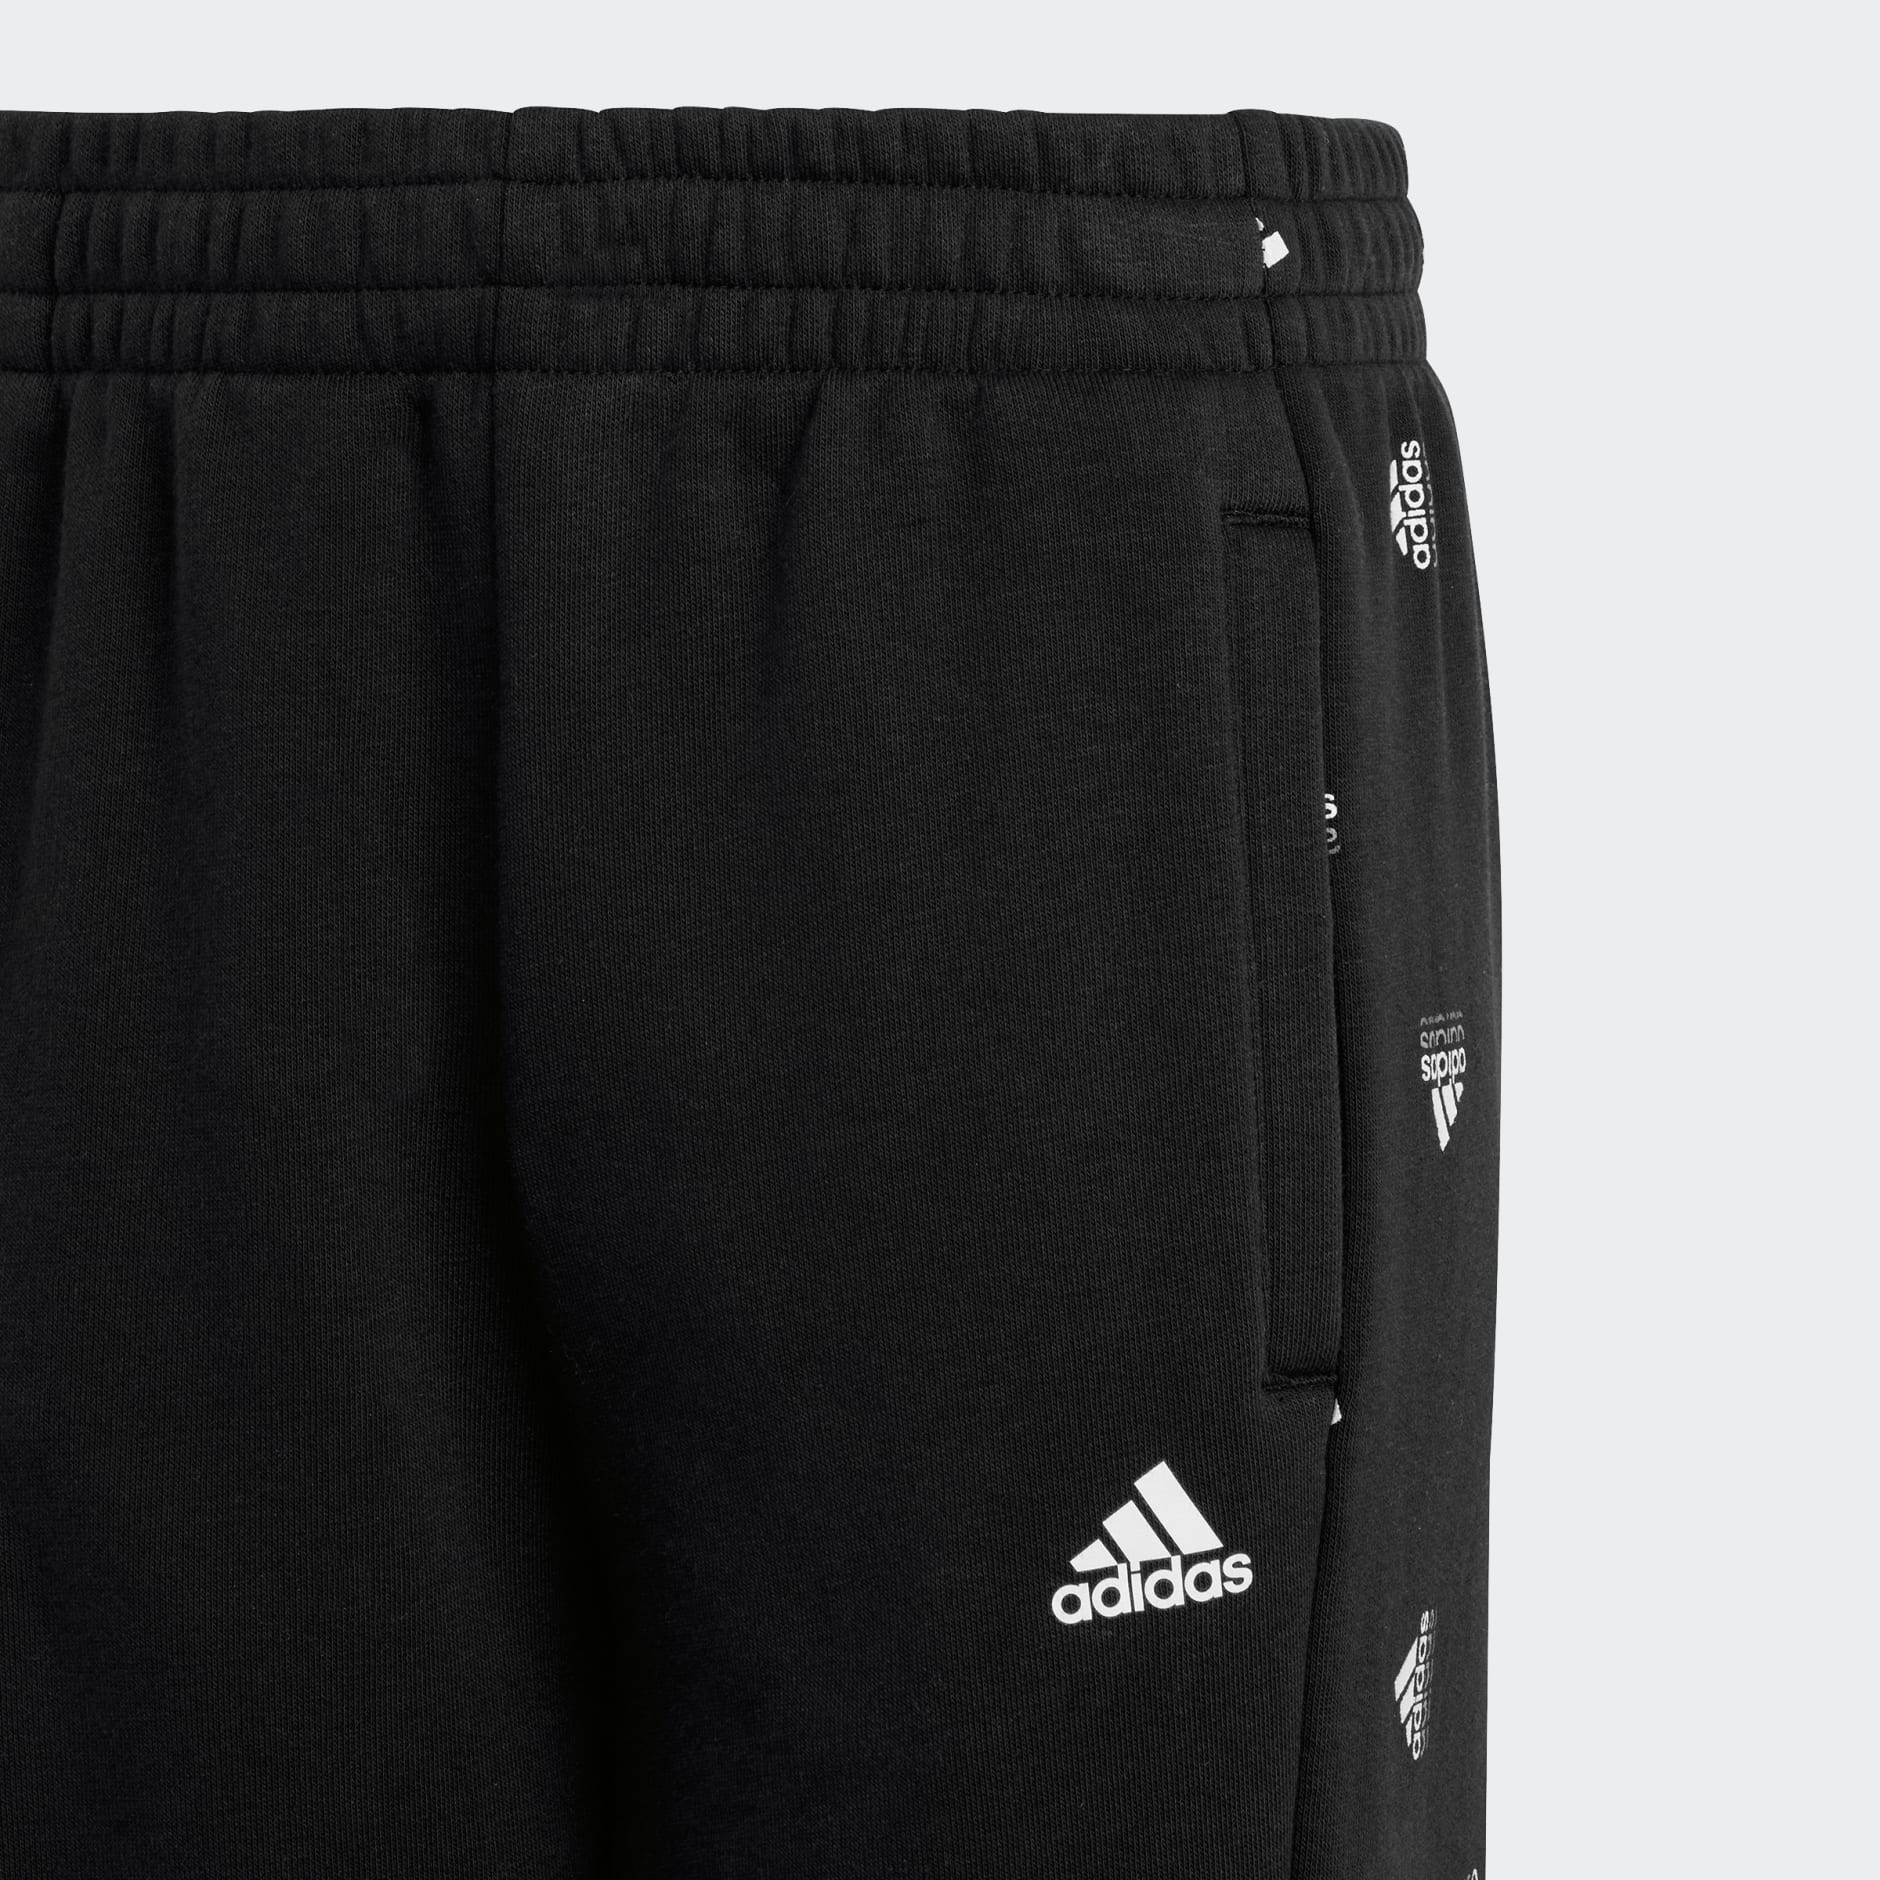 Flash soep Bezighouden Kids Clothing - Brand Love Side Insert Print Pants - Black | adidas Oman